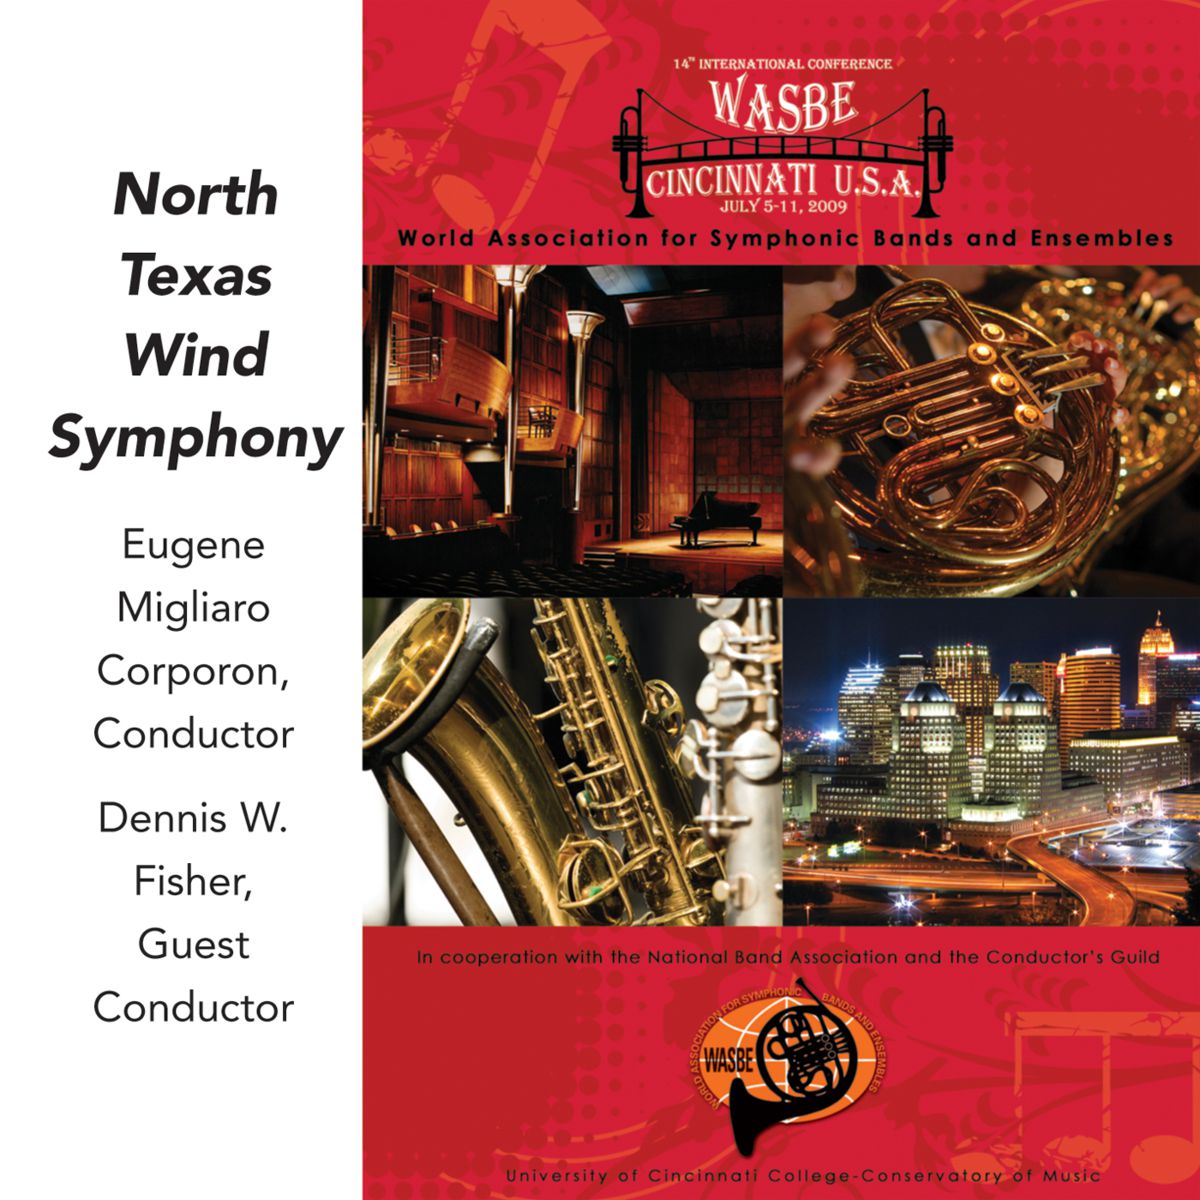 2009 WASBE Cincinnati, USA: North Texas Wind Symphony - klik hier